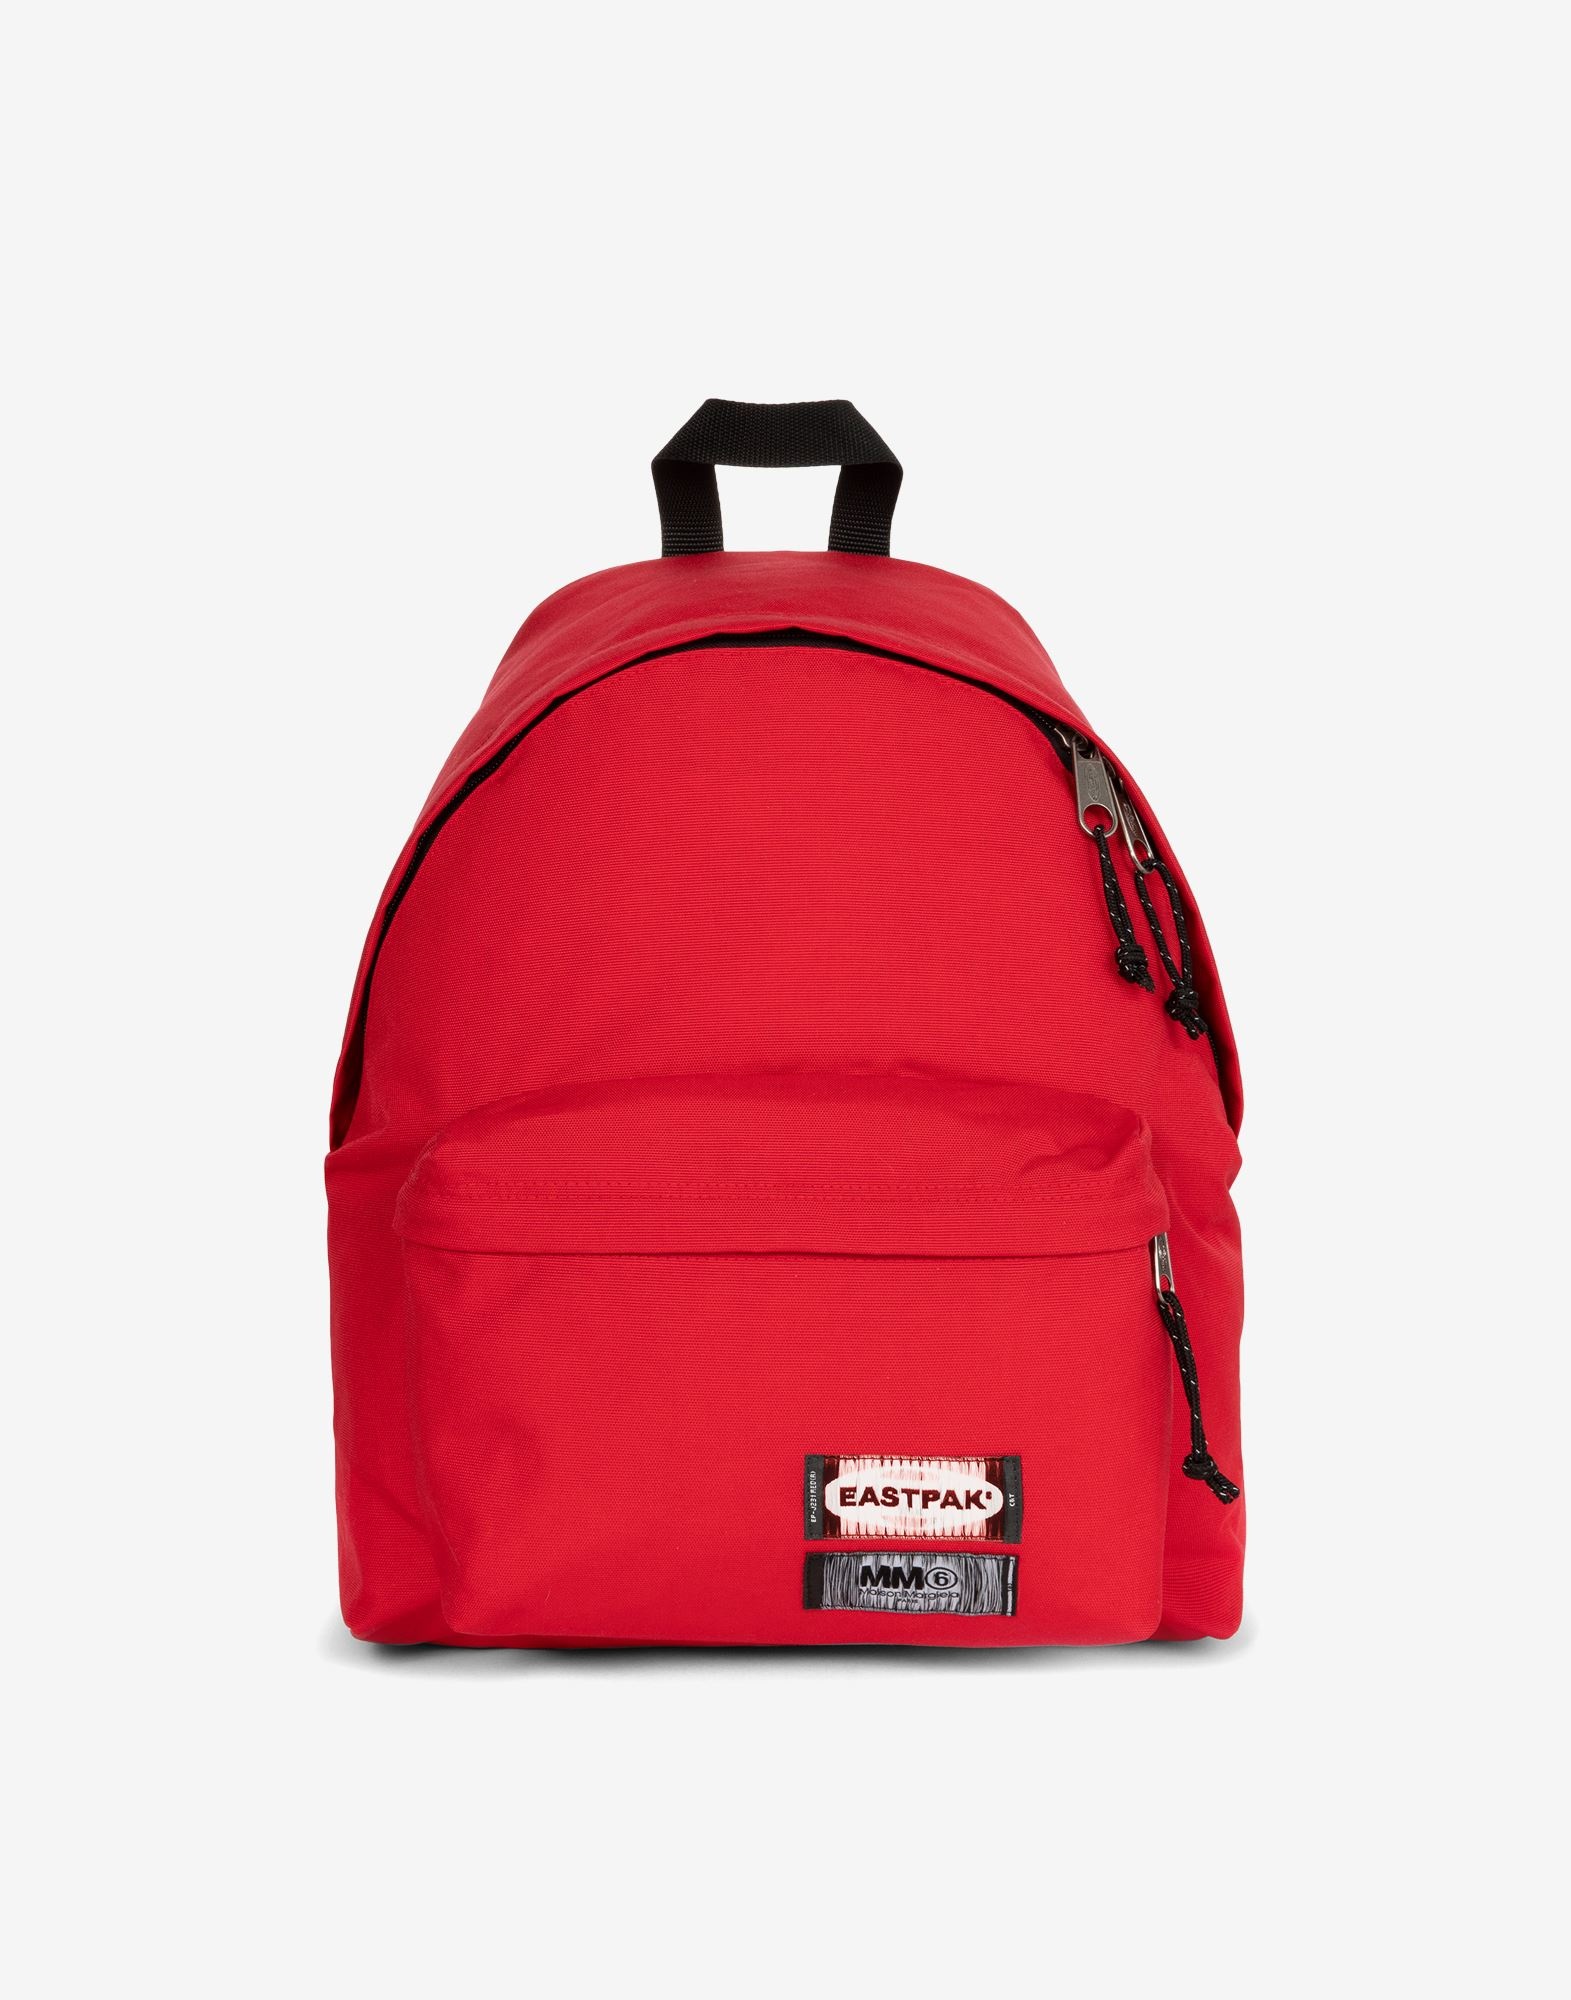 MM6 x Eastpak reversible backpack - 1